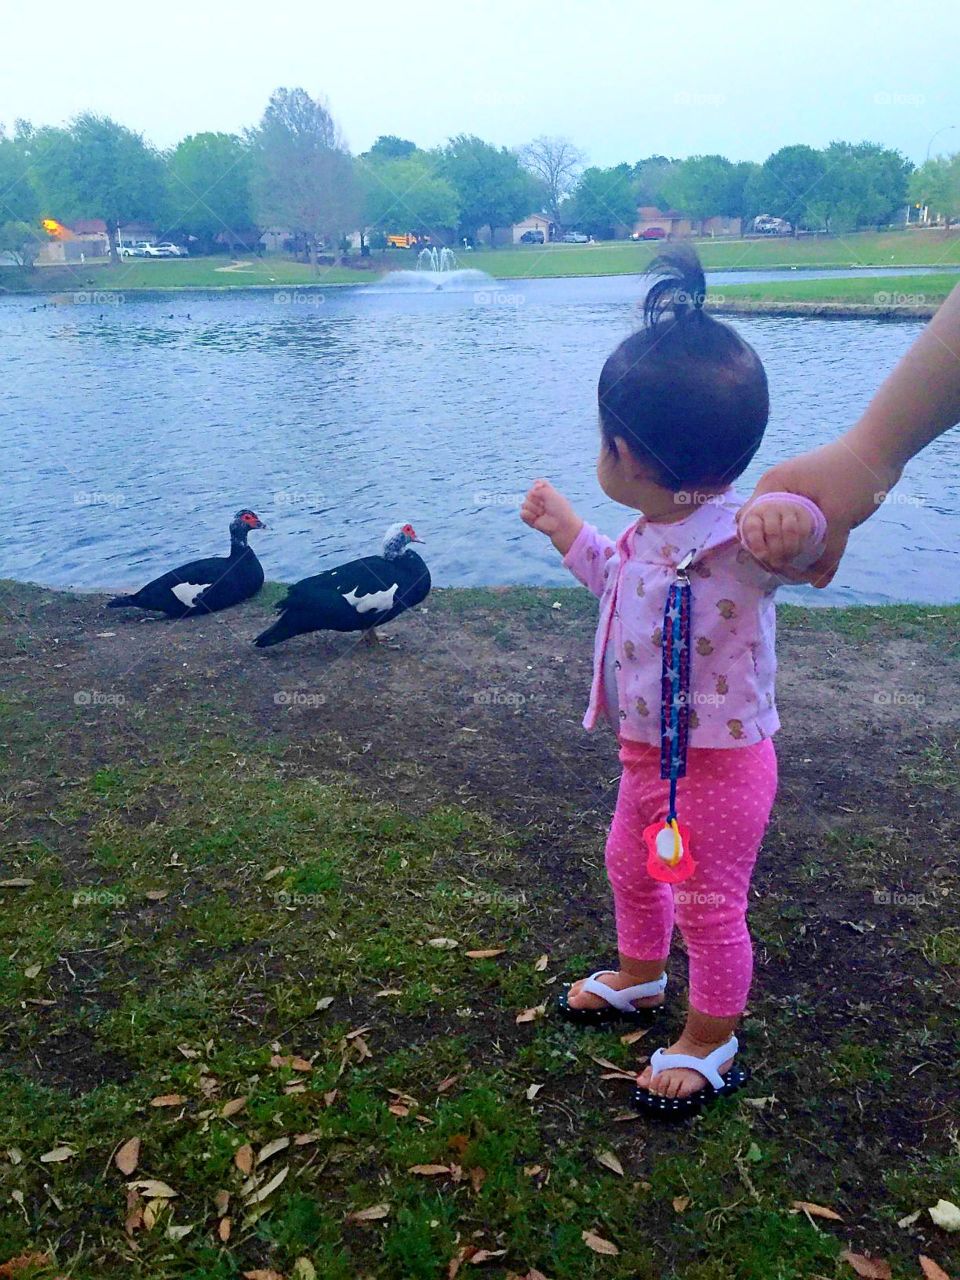 Arlington TX  Ducks park's